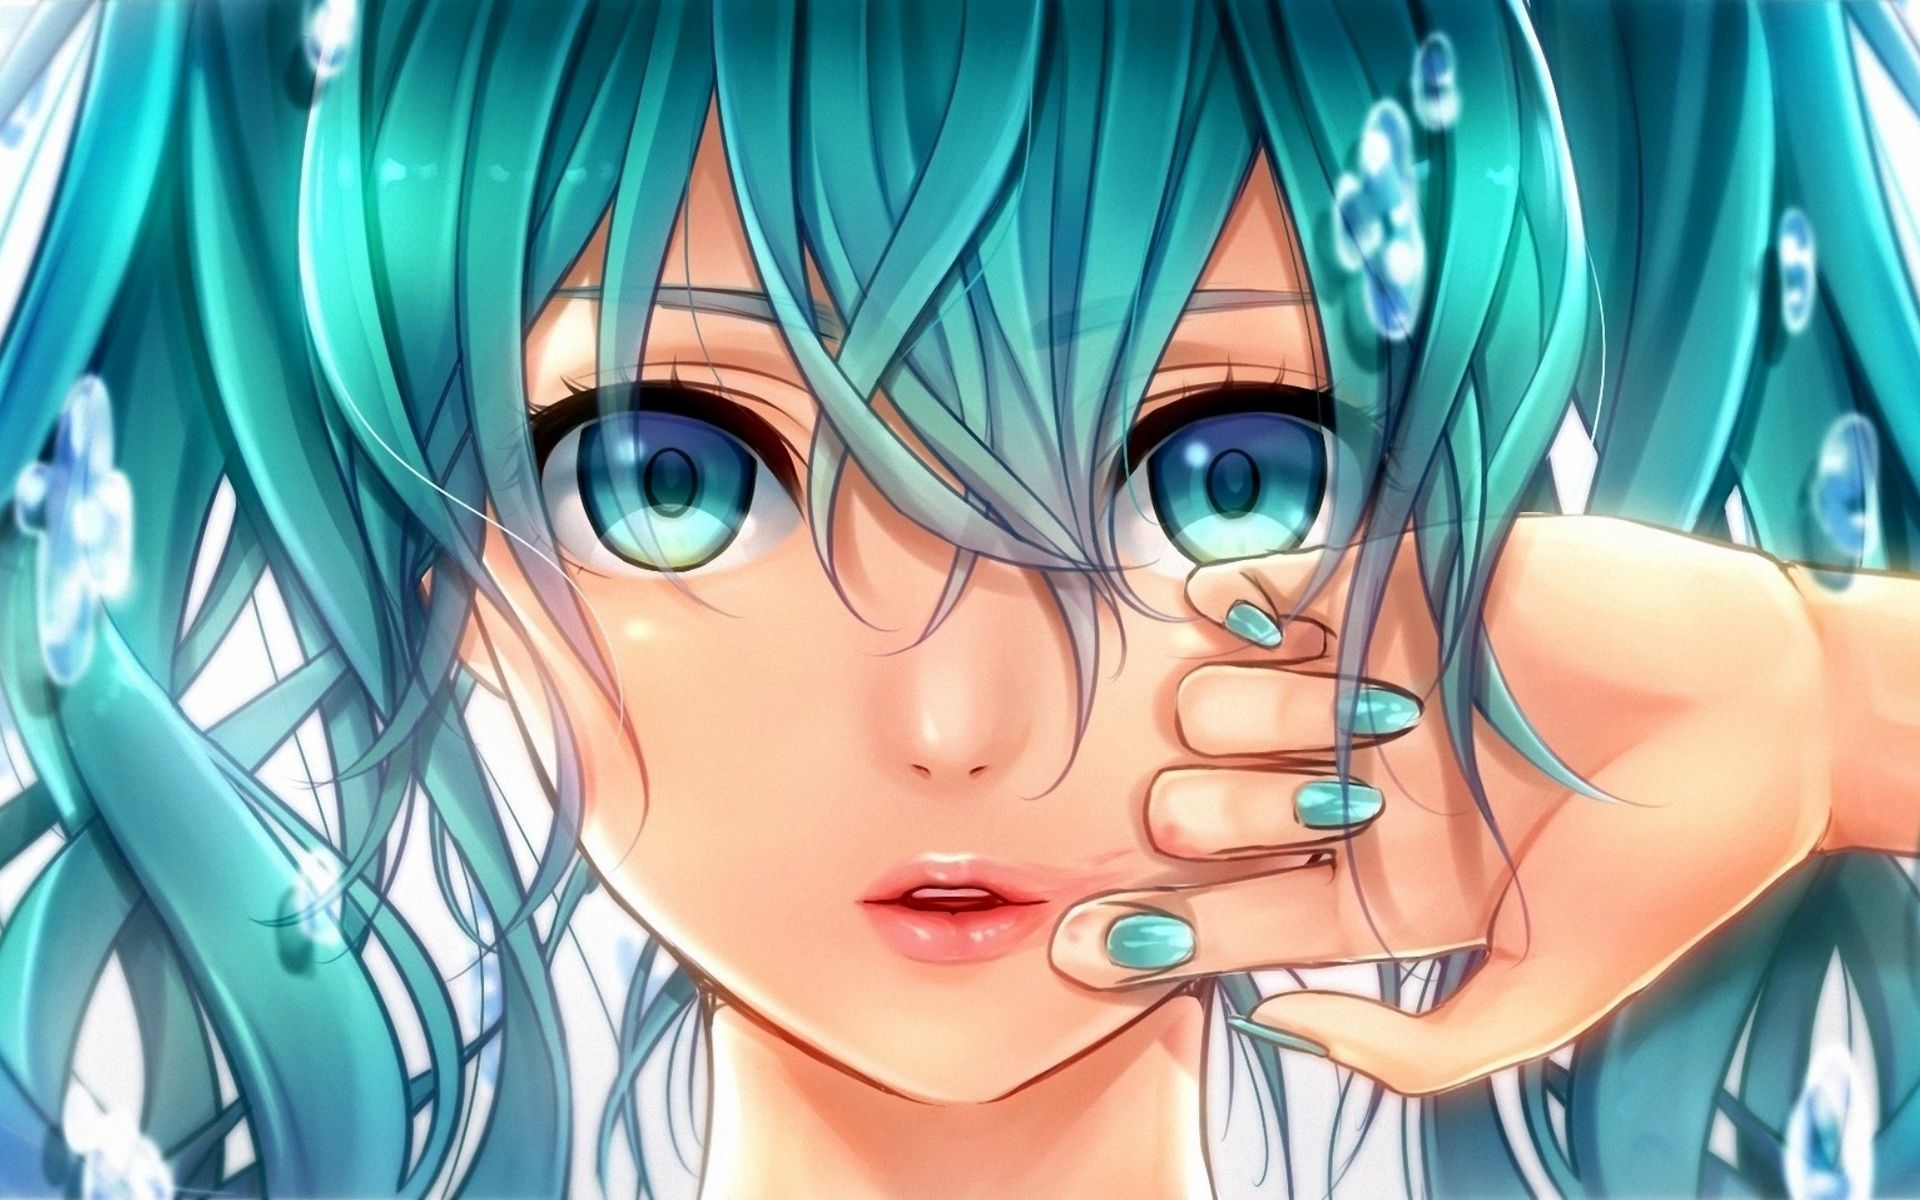 Blue Hair Anime Girl - wide 1